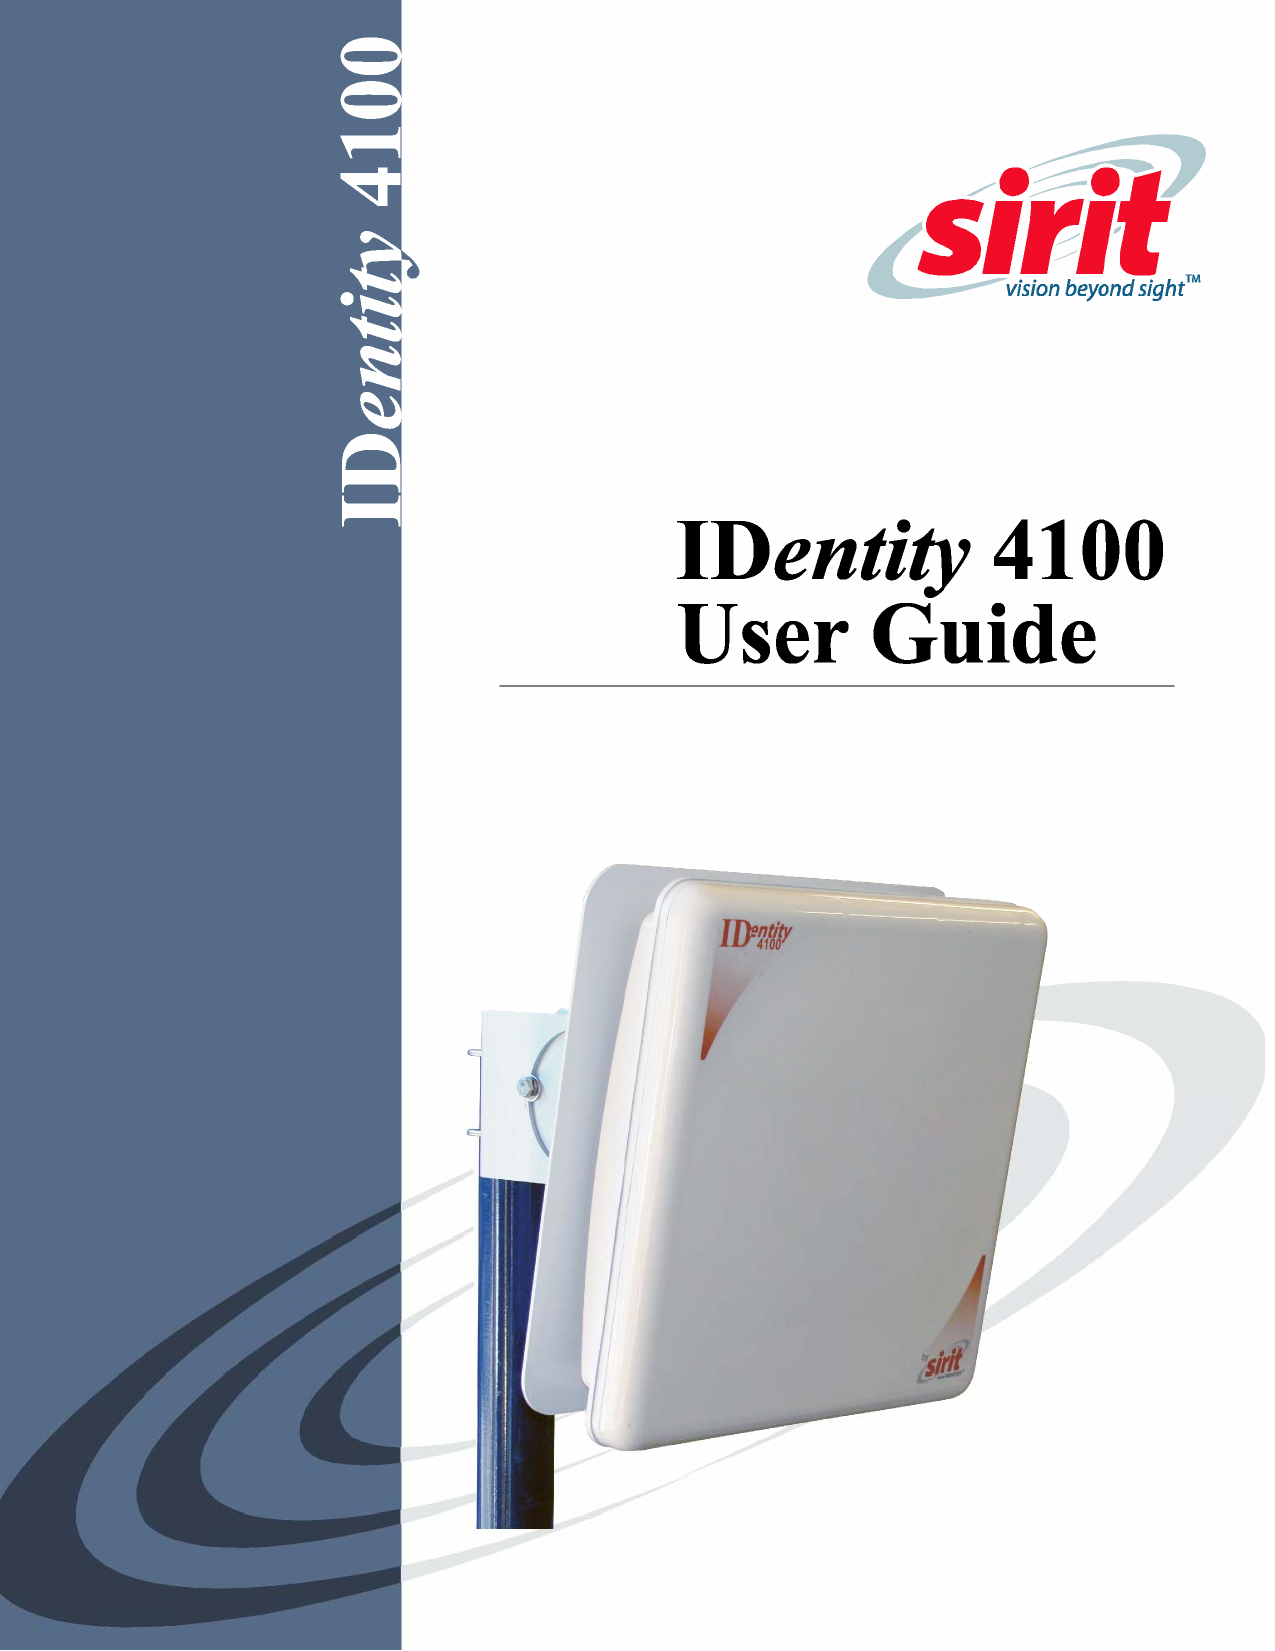        IDentity 4100 User Guide            